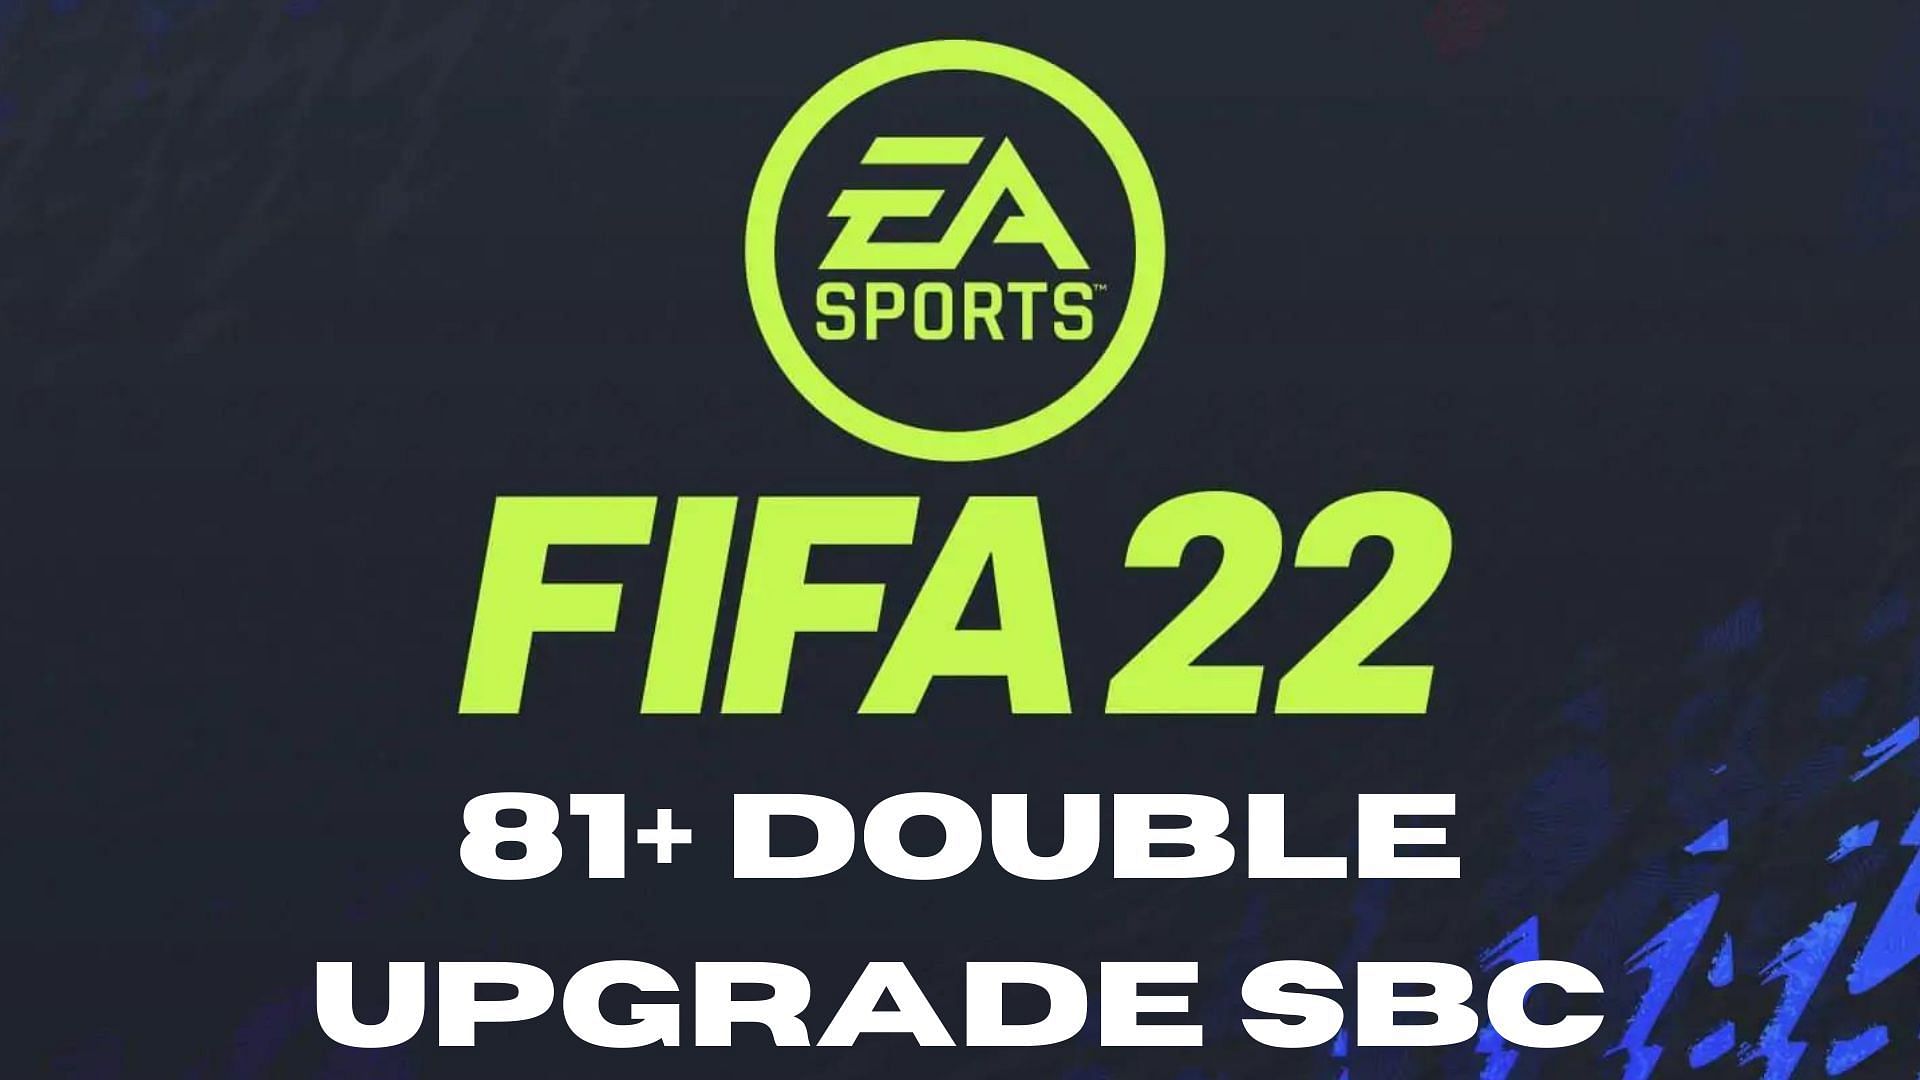 FIFA 22 81+ Double Upgrade SBC is live (Image via Sportskeeda)